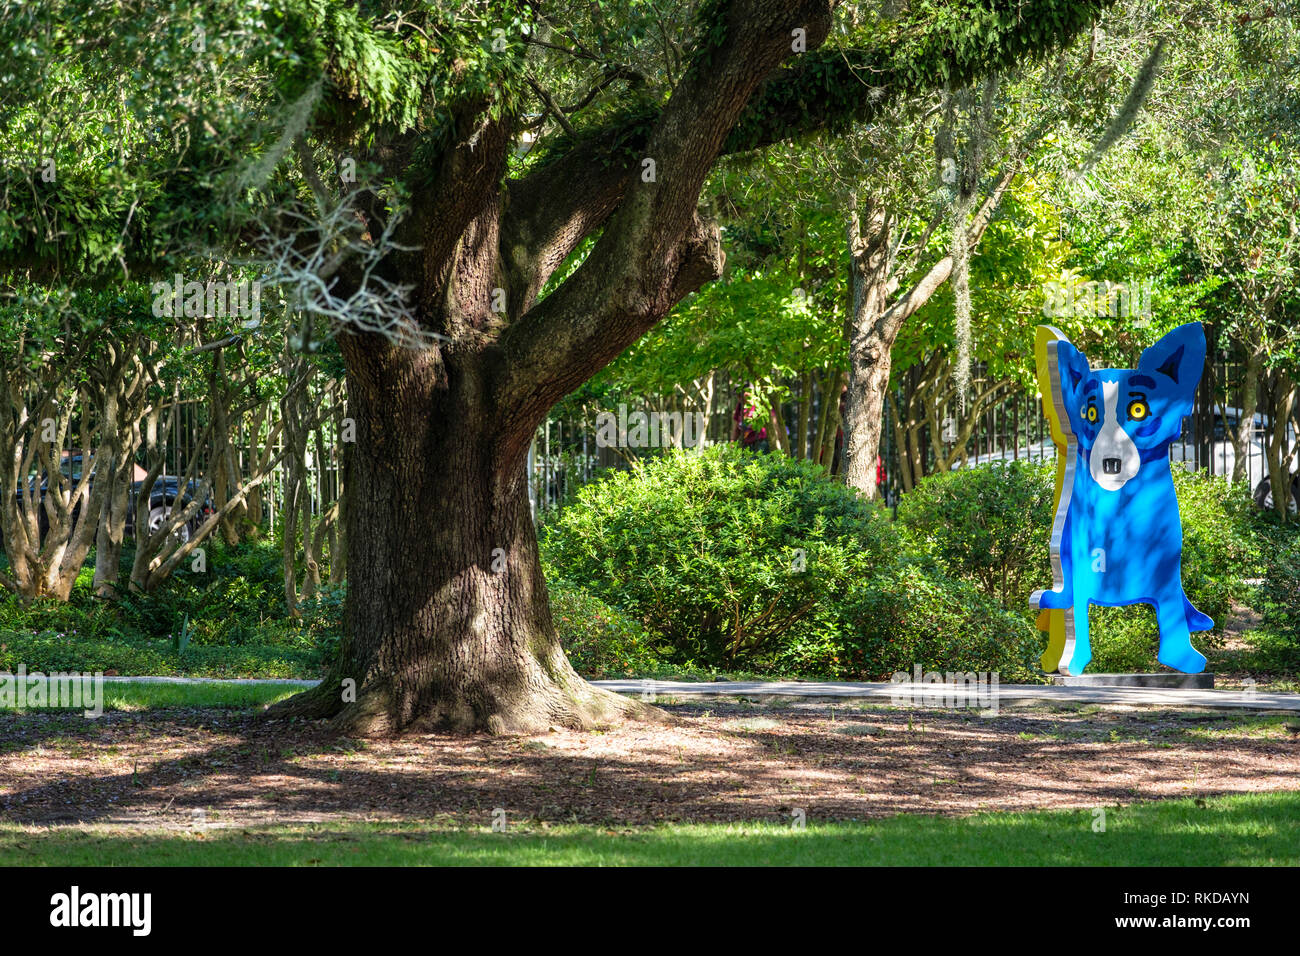 George Rodrigue Blue dog sculpture We Stand Together, 2005, New Orleans sculpture Garden New Orleans, City Park, Louisiane, États-Unis Banque D'Images